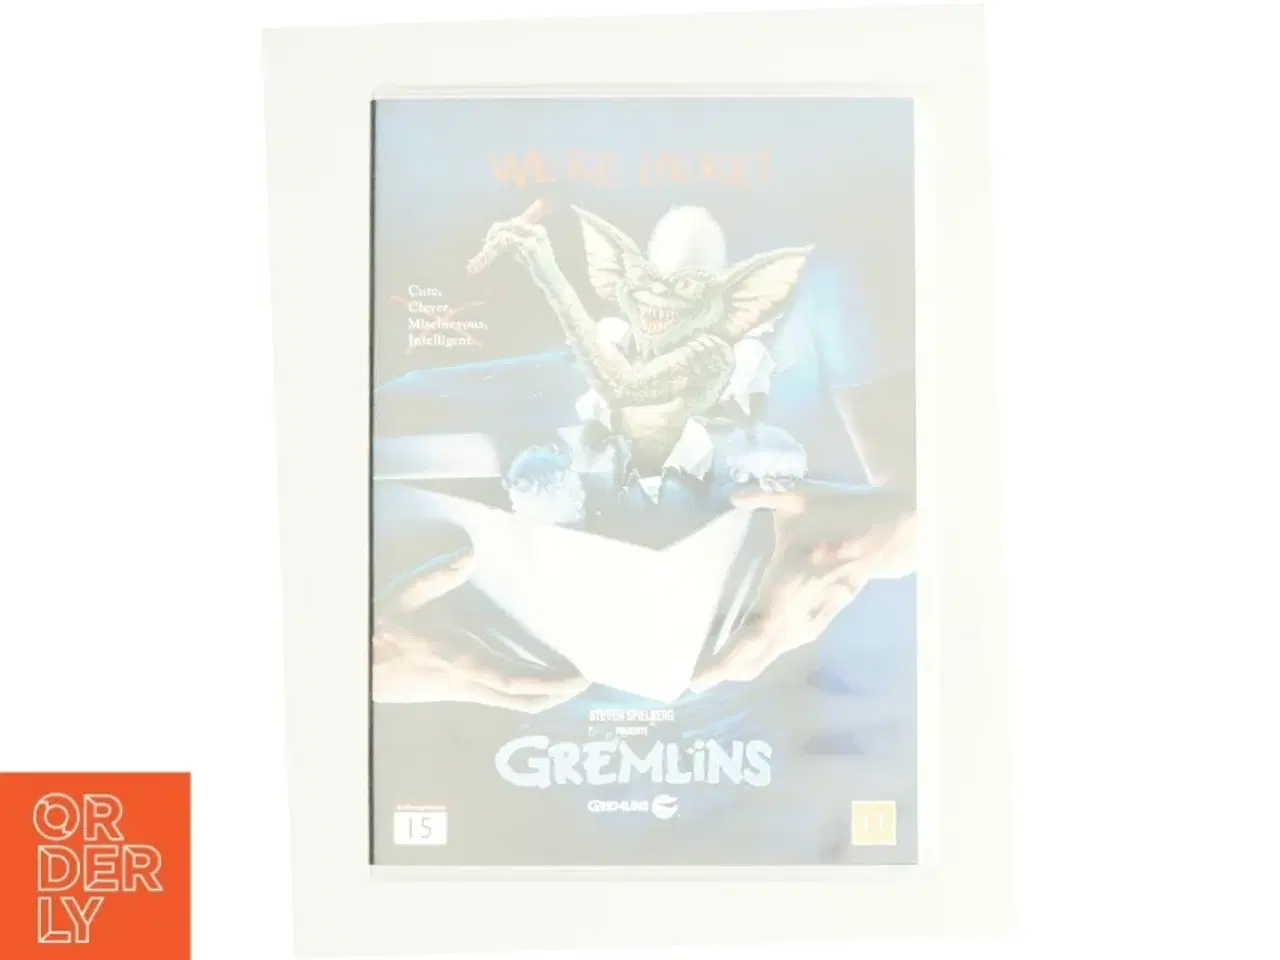 Billede 1 - Gremlins (Dvd / S/N)                            <span class="label label-blank pull-right">Standard edition</span> fra DVD